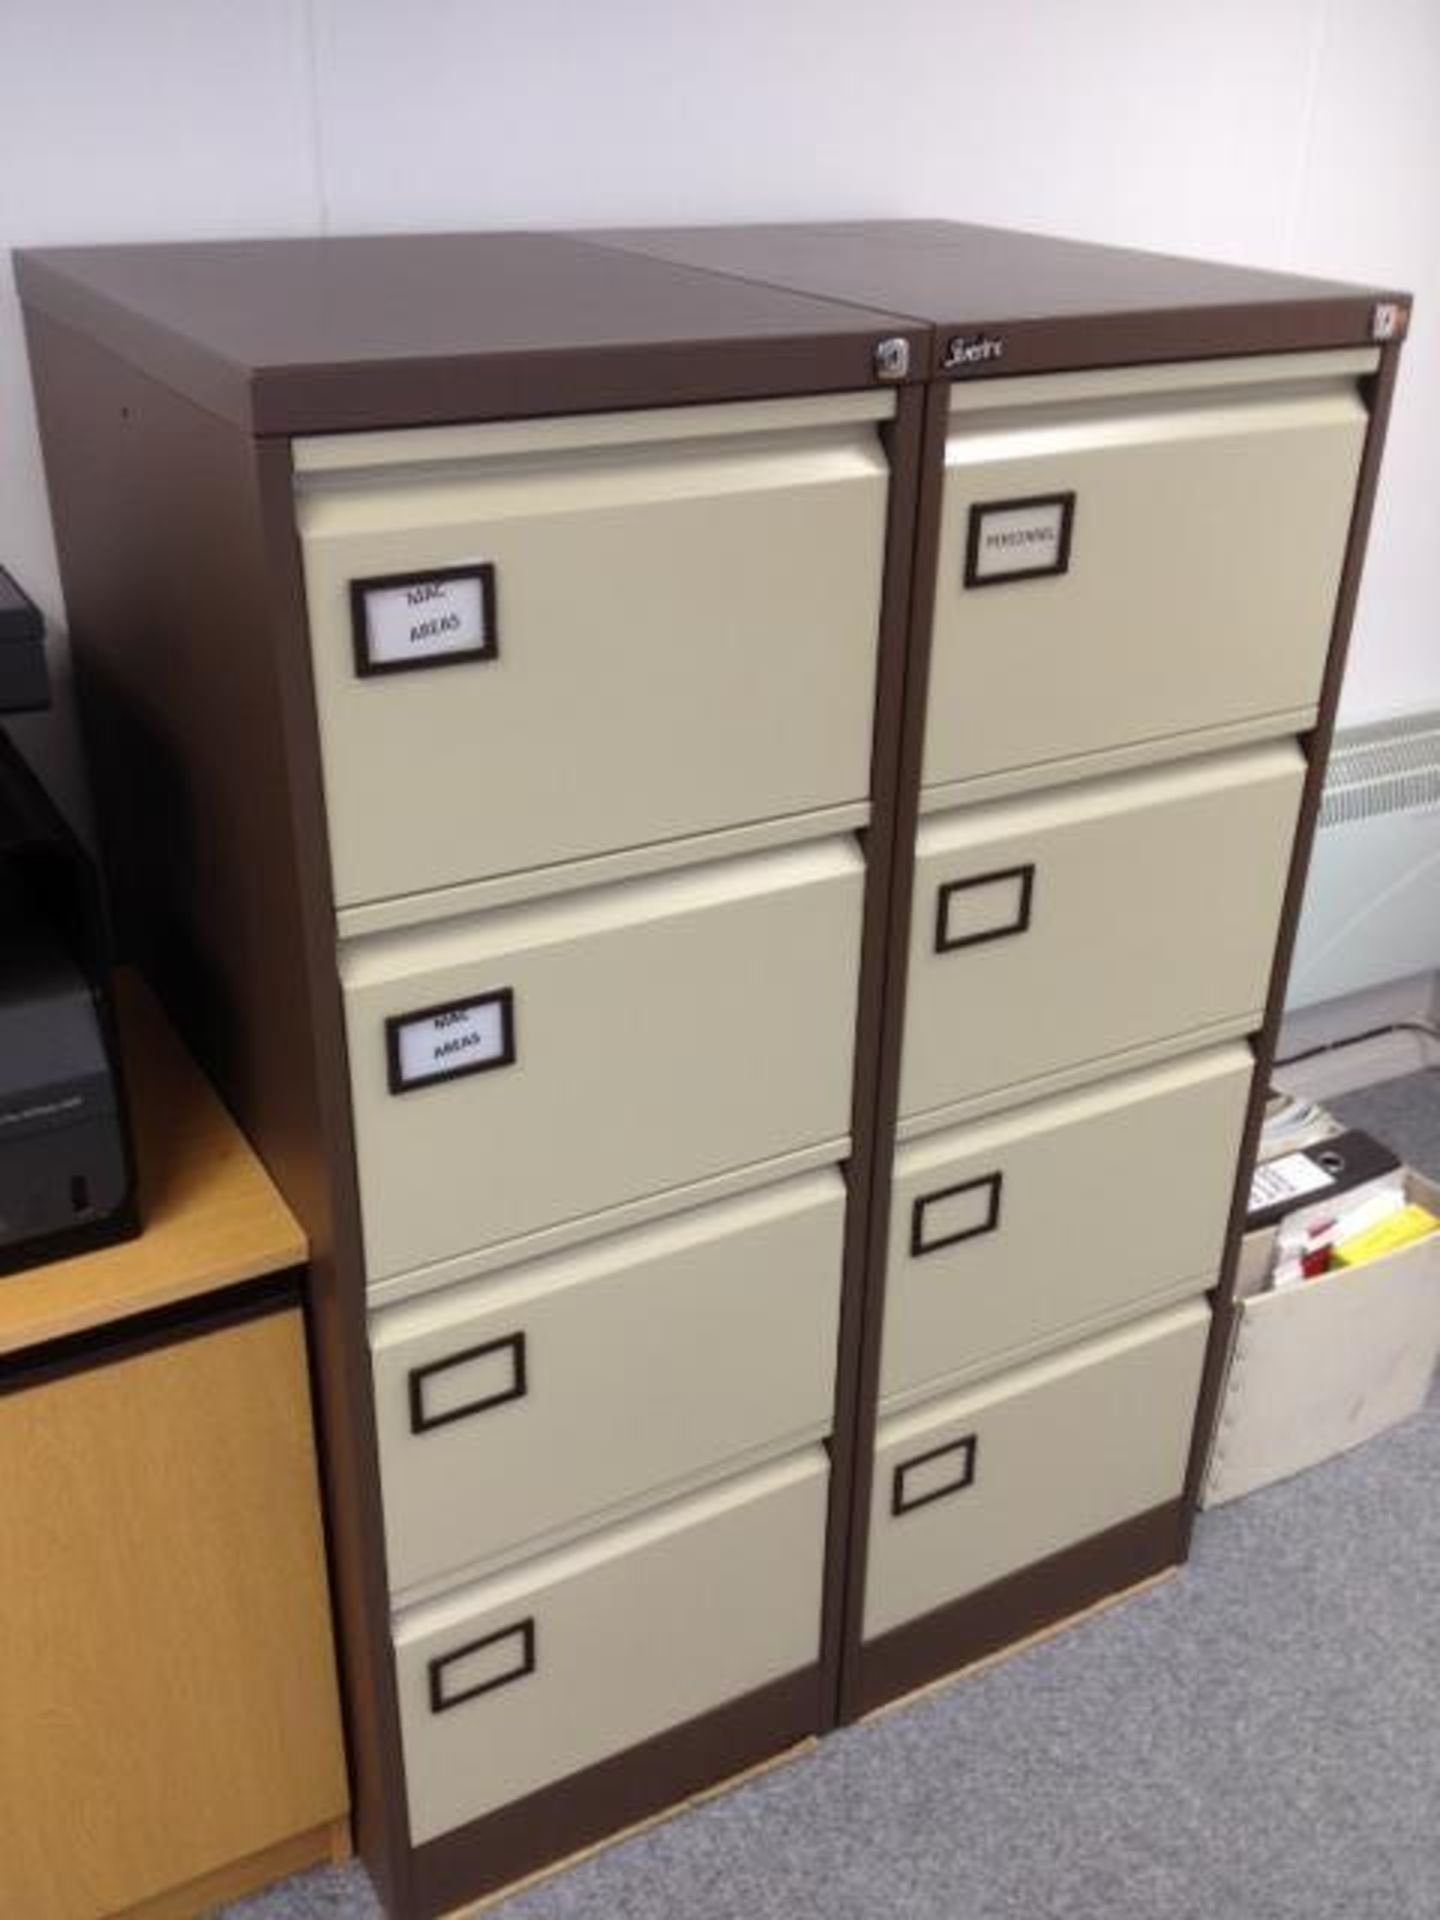 Silverline metal four drawer filing cabinet (no key)